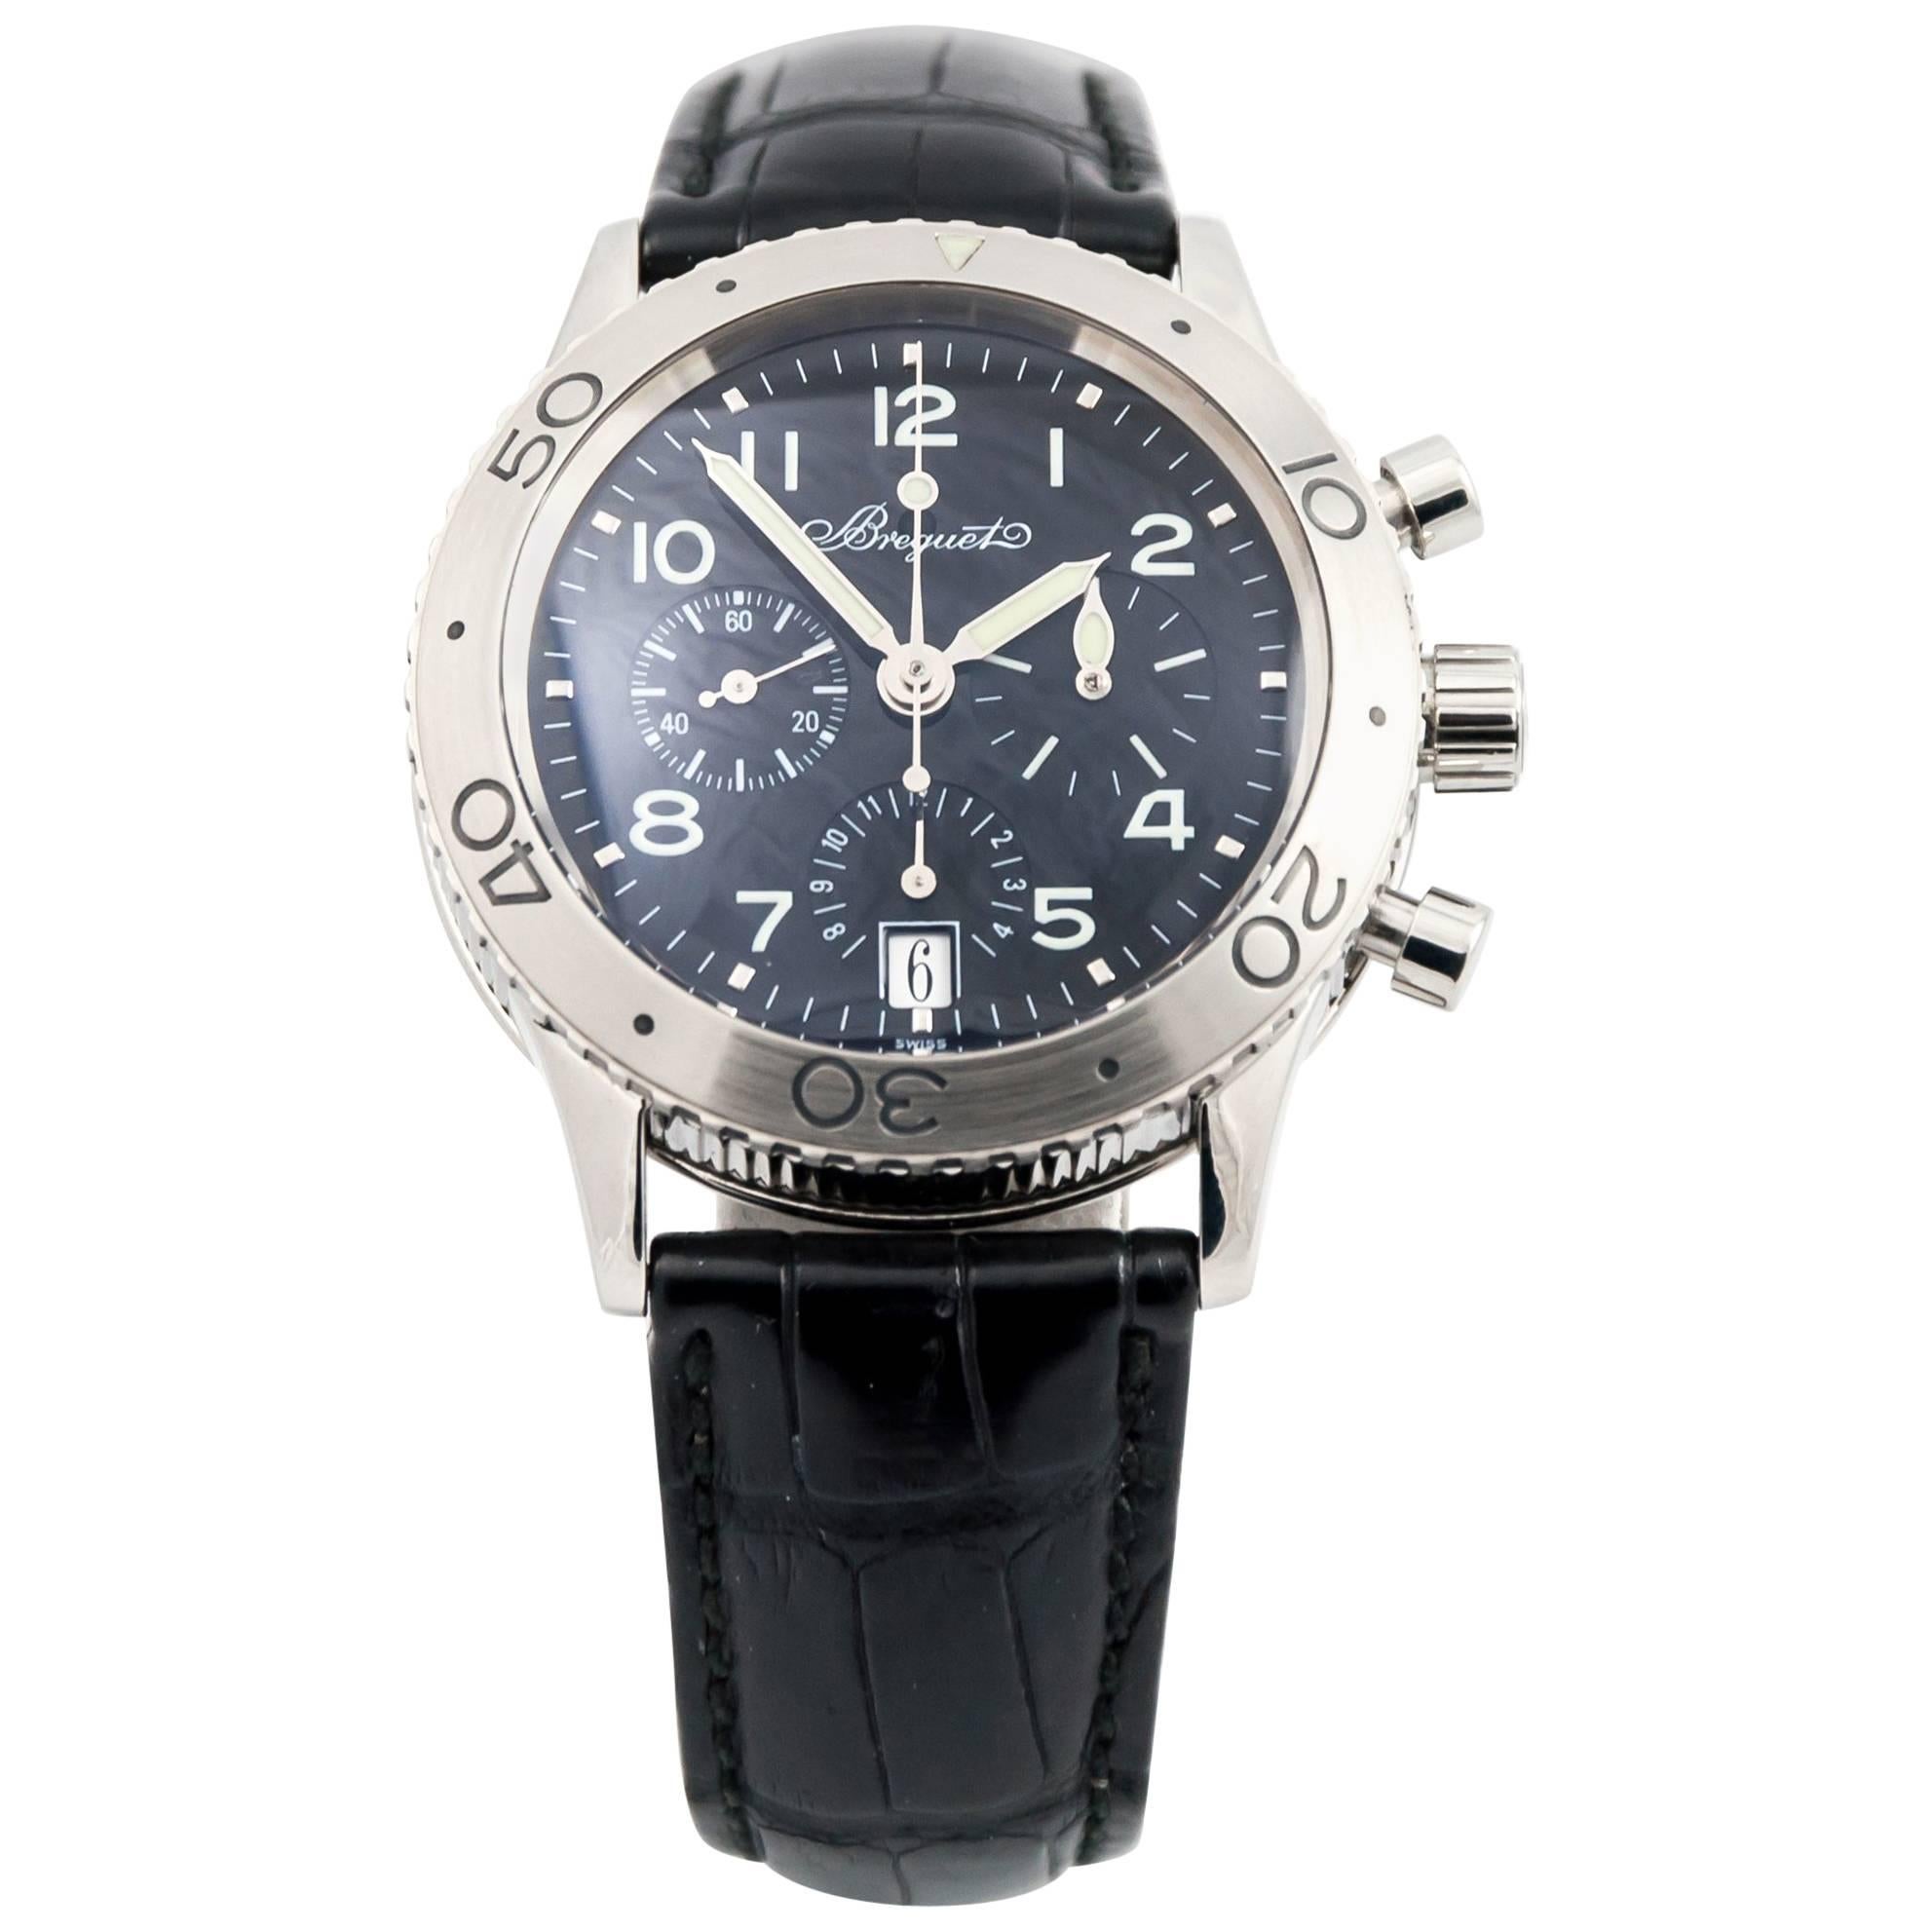 Breguet stainless Steel Transatlantique 3820 Chronograph Automatic Wristwatch